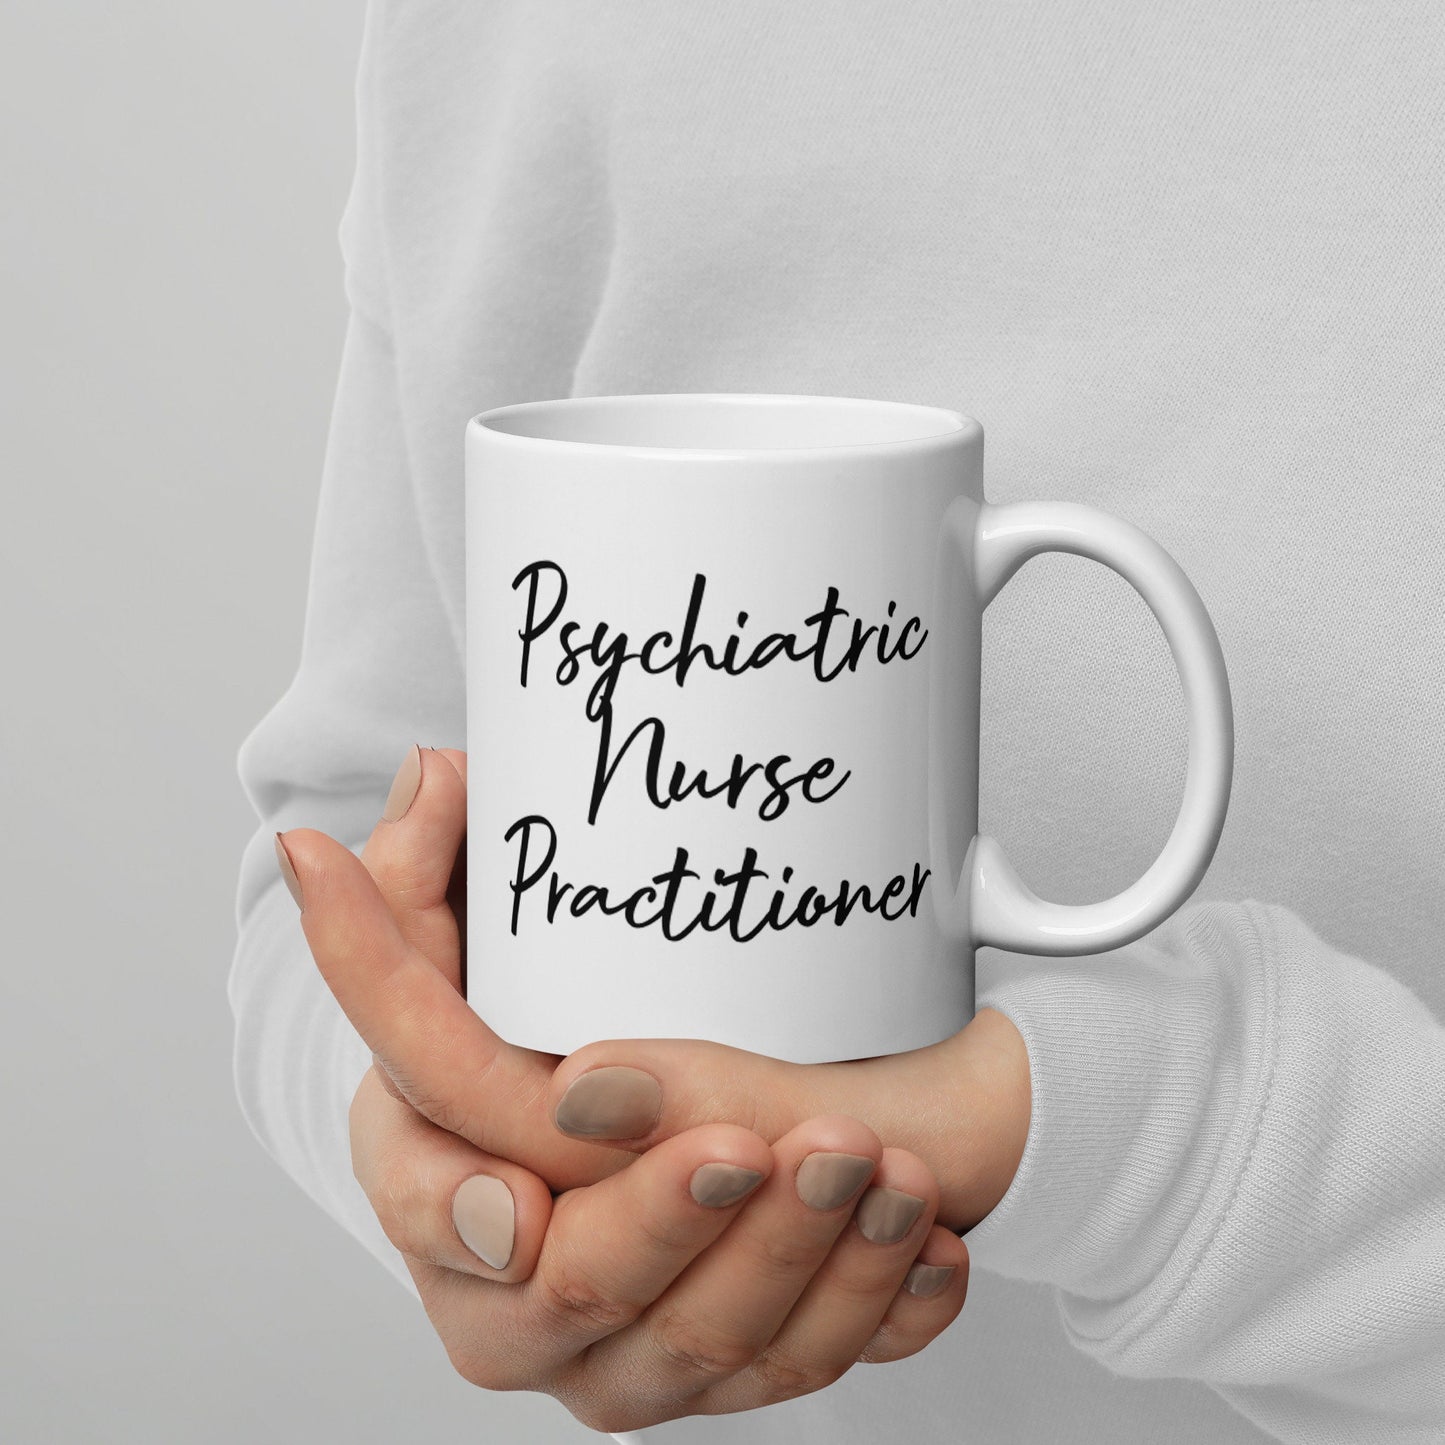 Psychiatric Nurse Practitioner Mug